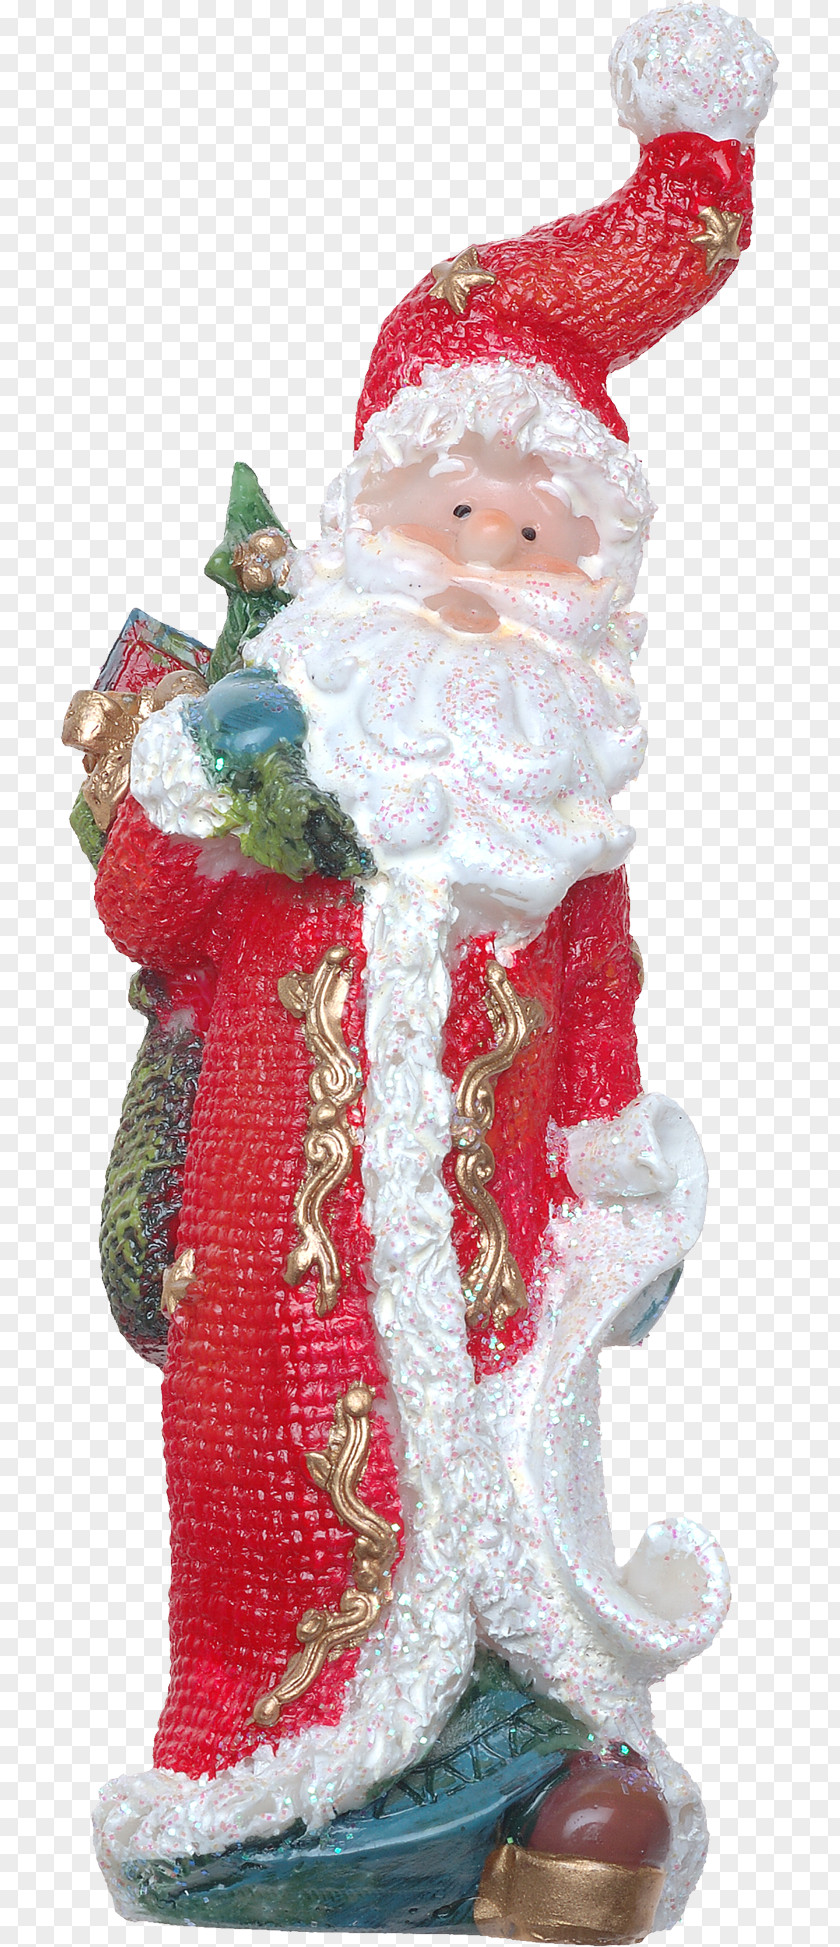 Santa Ded Moroz Claus Snegurochka Christmas Ornament Grandfather PNG